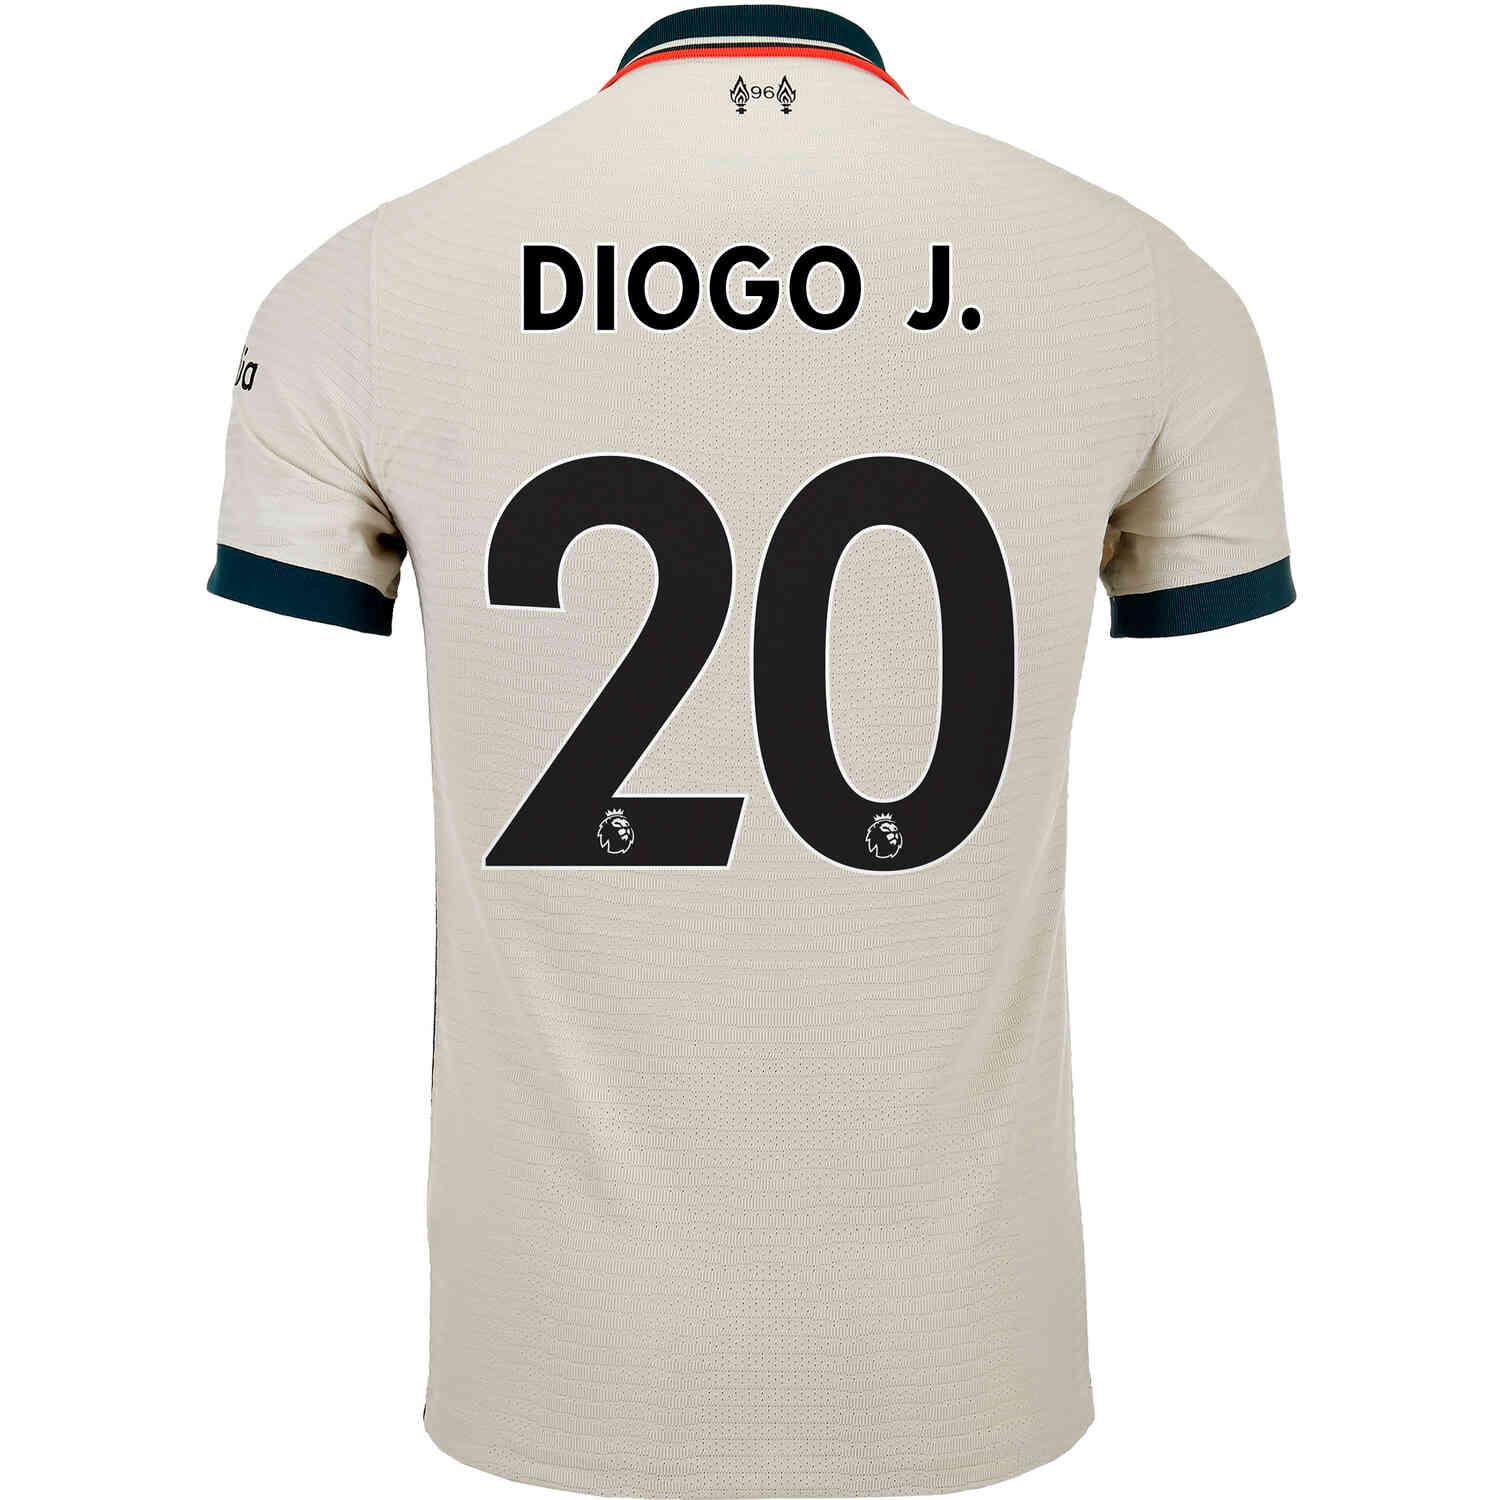 2021/22 Nike Diogo Jota Liverpool Away Match Jersey - SoccerPro